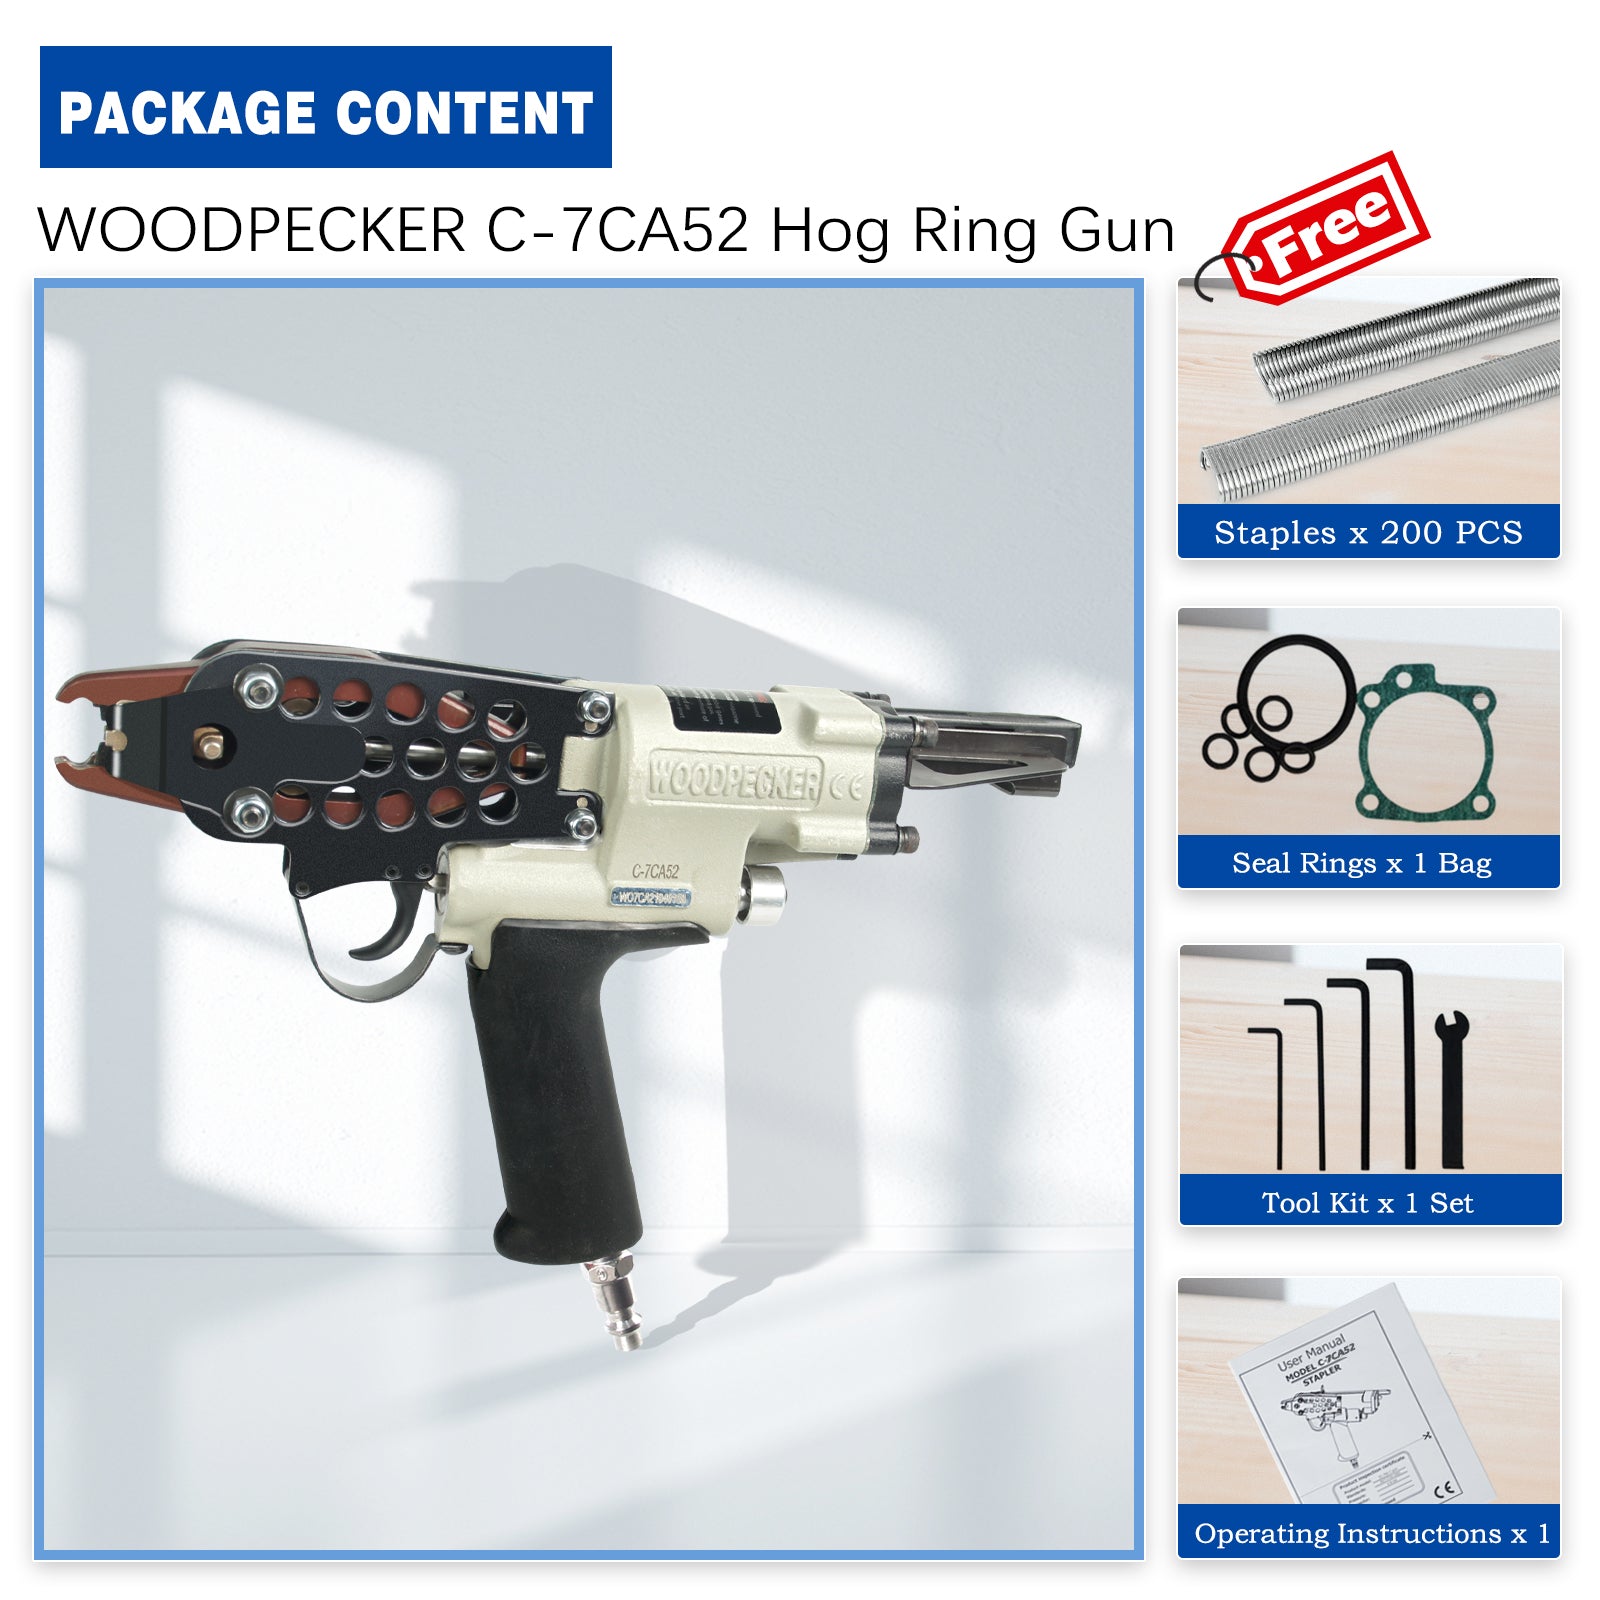 WOODPECKER C-7CA52 15 Gauge Pneumatic Hog Ring Gun, 3/4